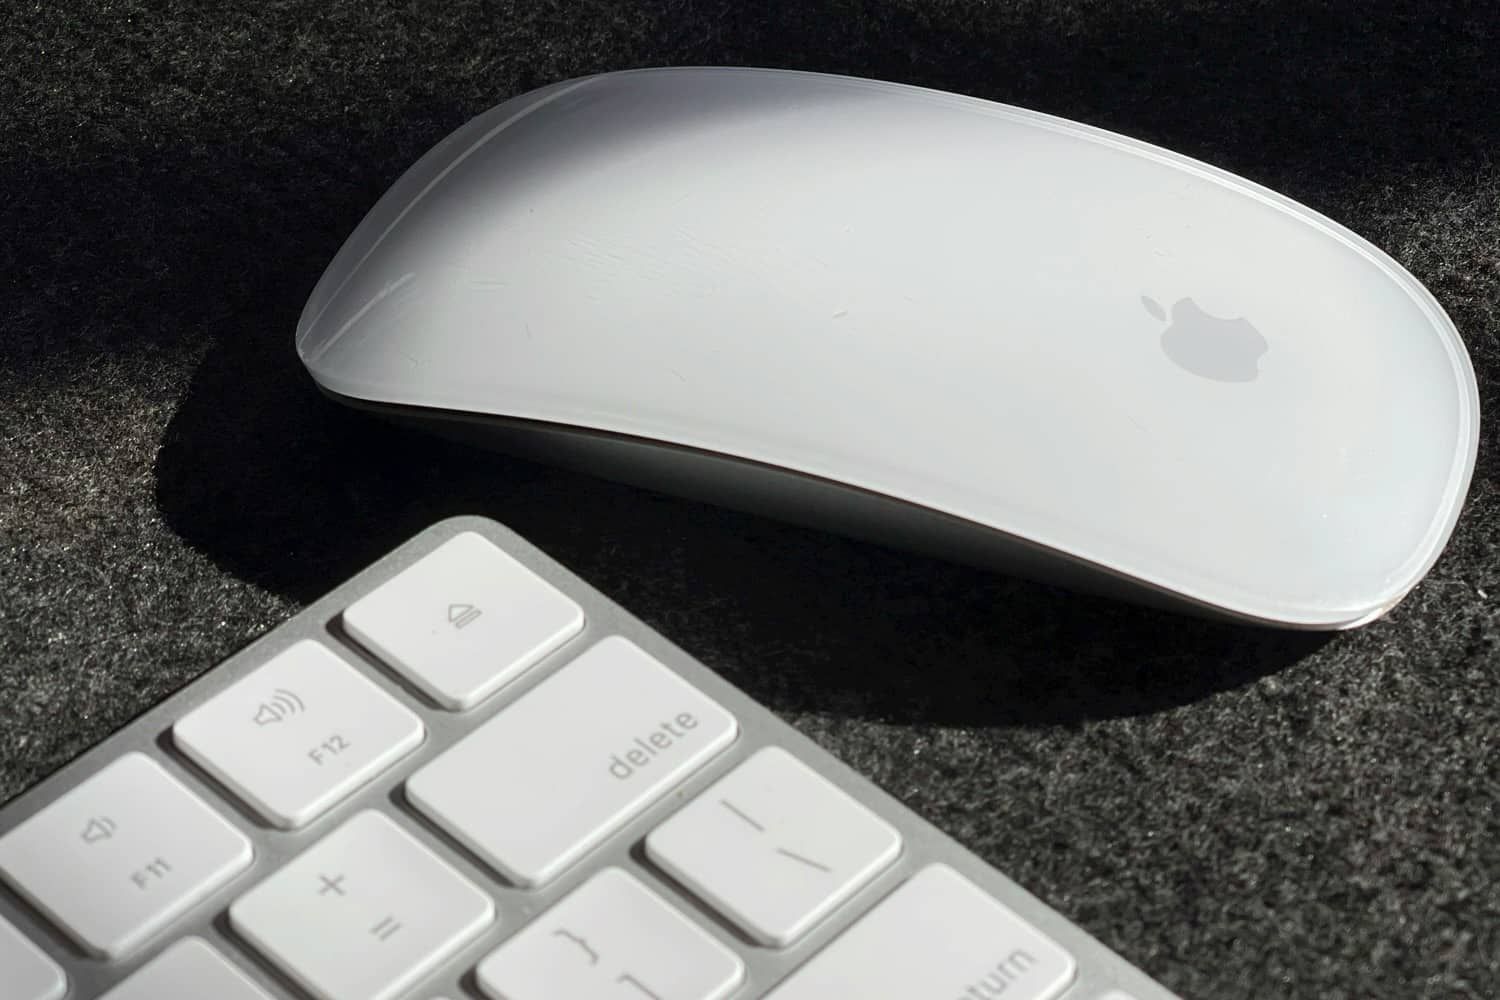 Magic Mouse et Magic Keyboard